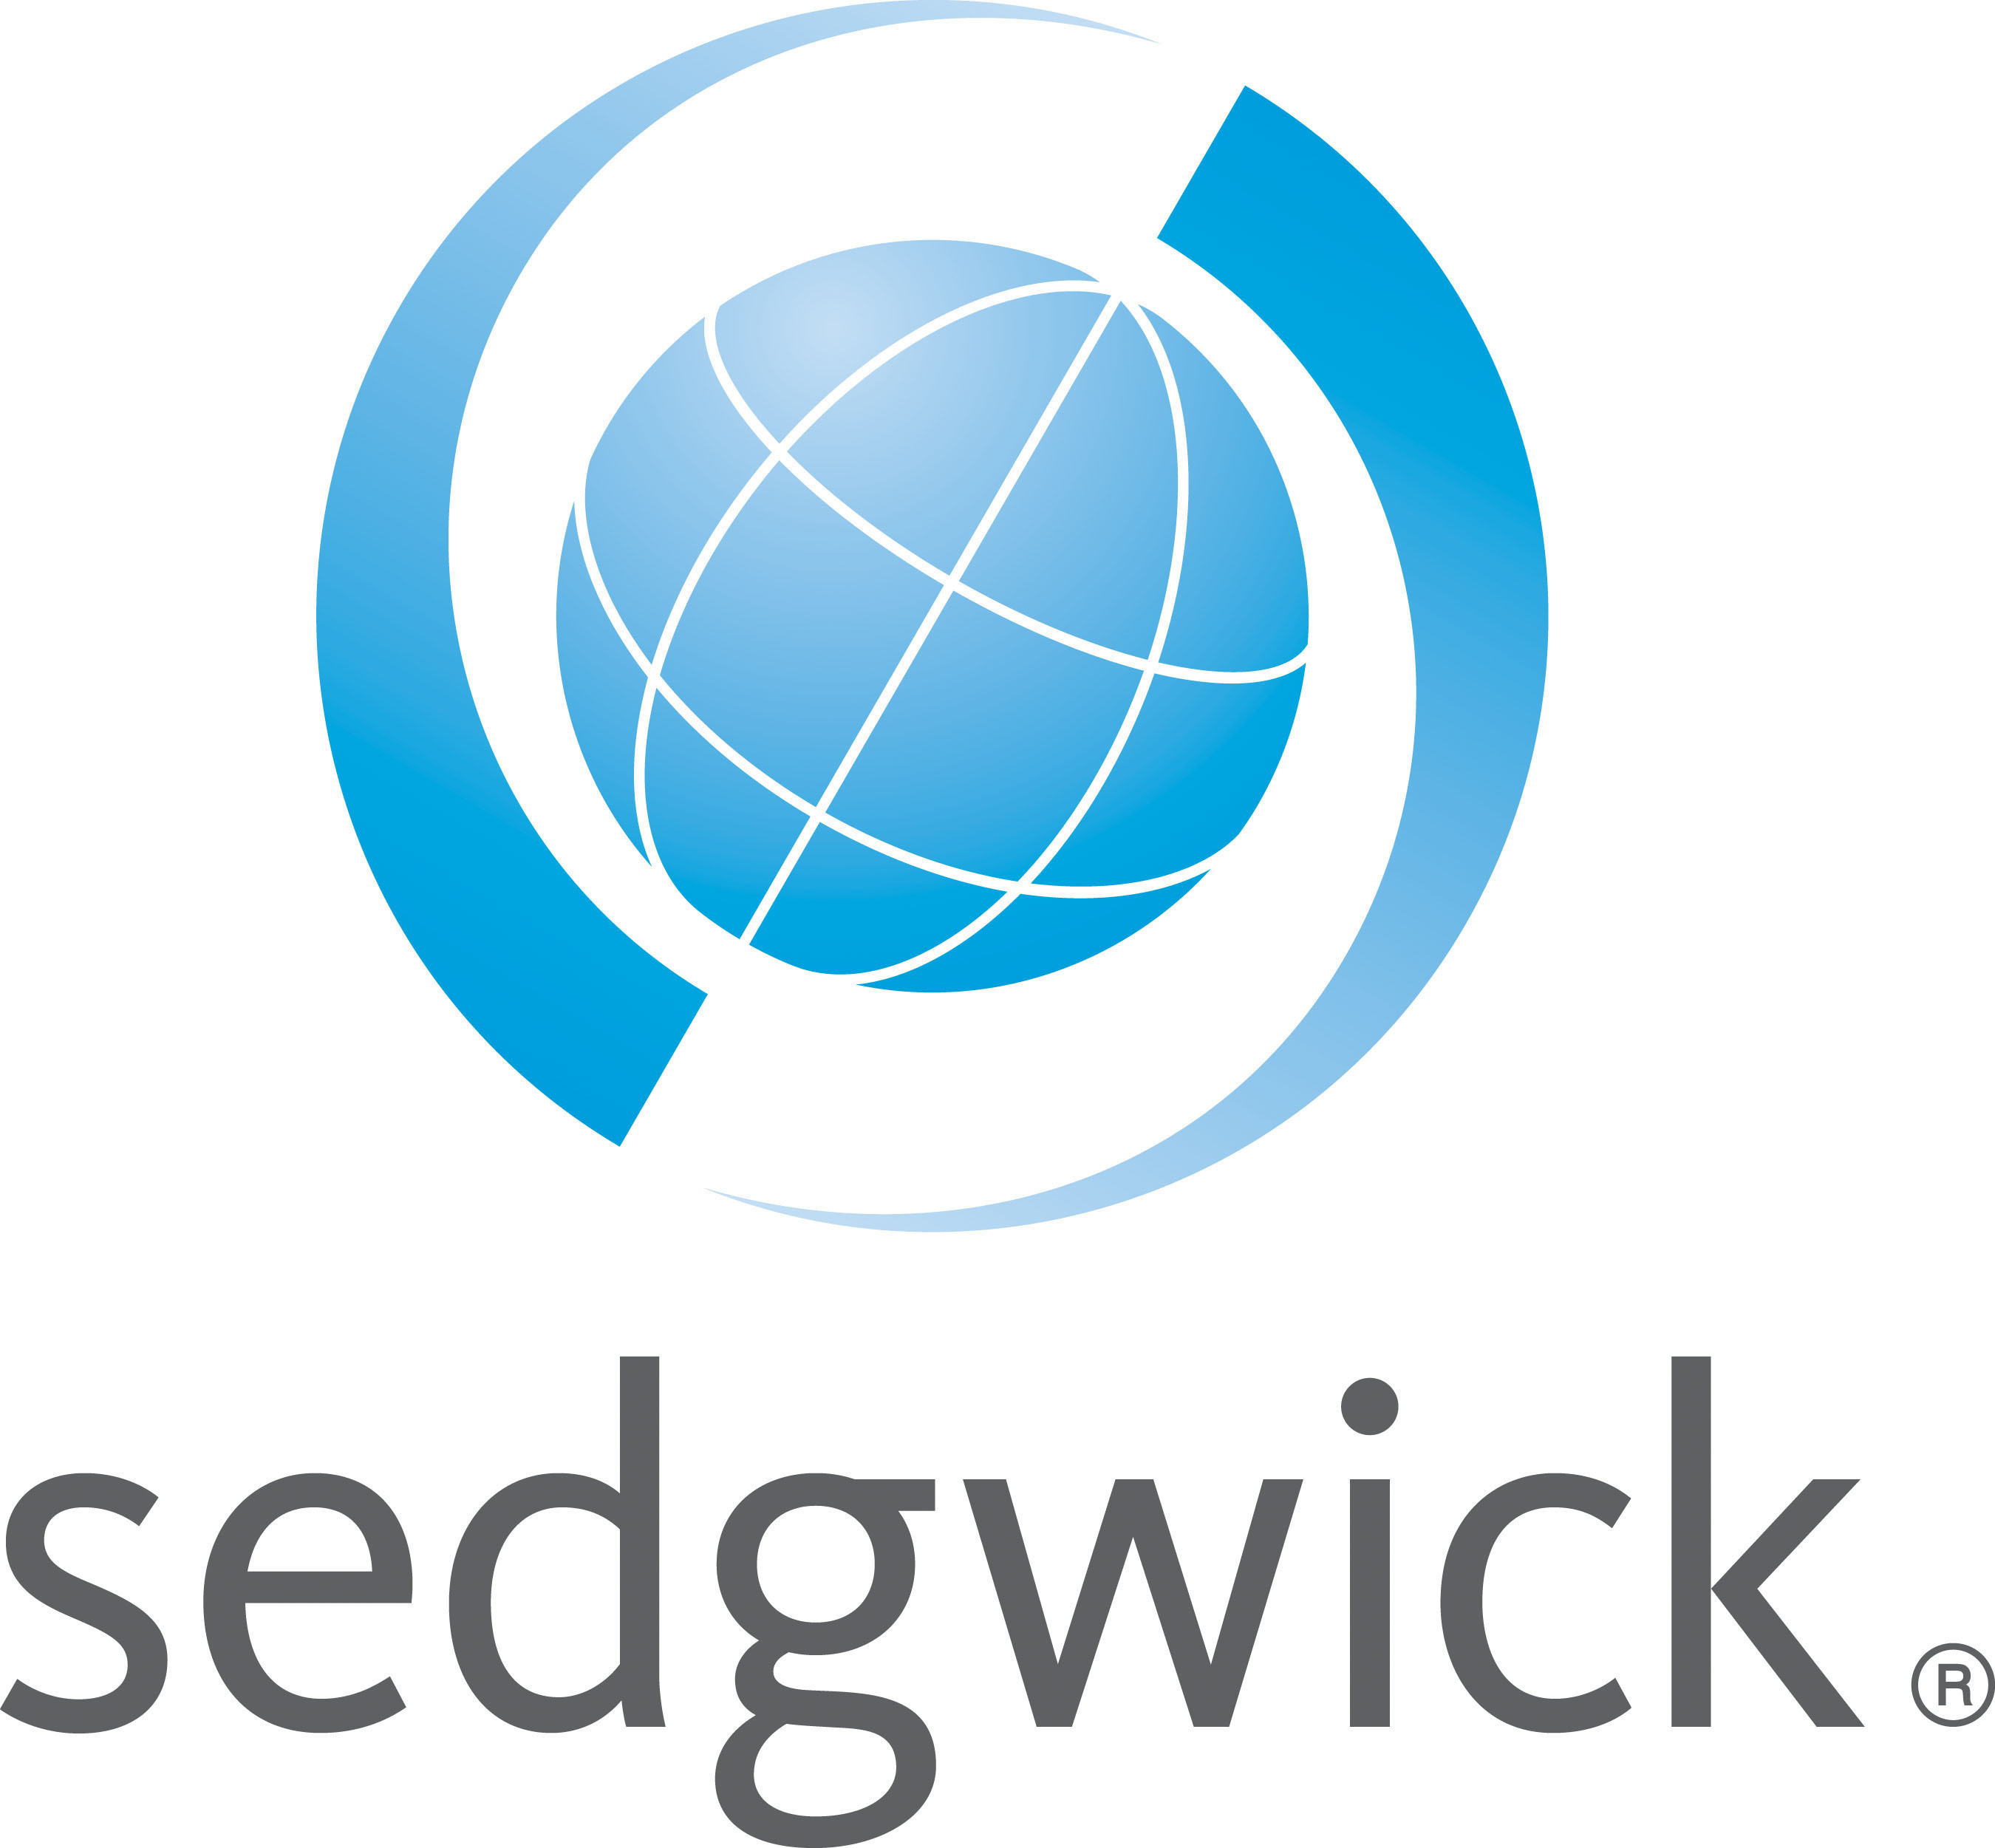 Sedgwick Logo.